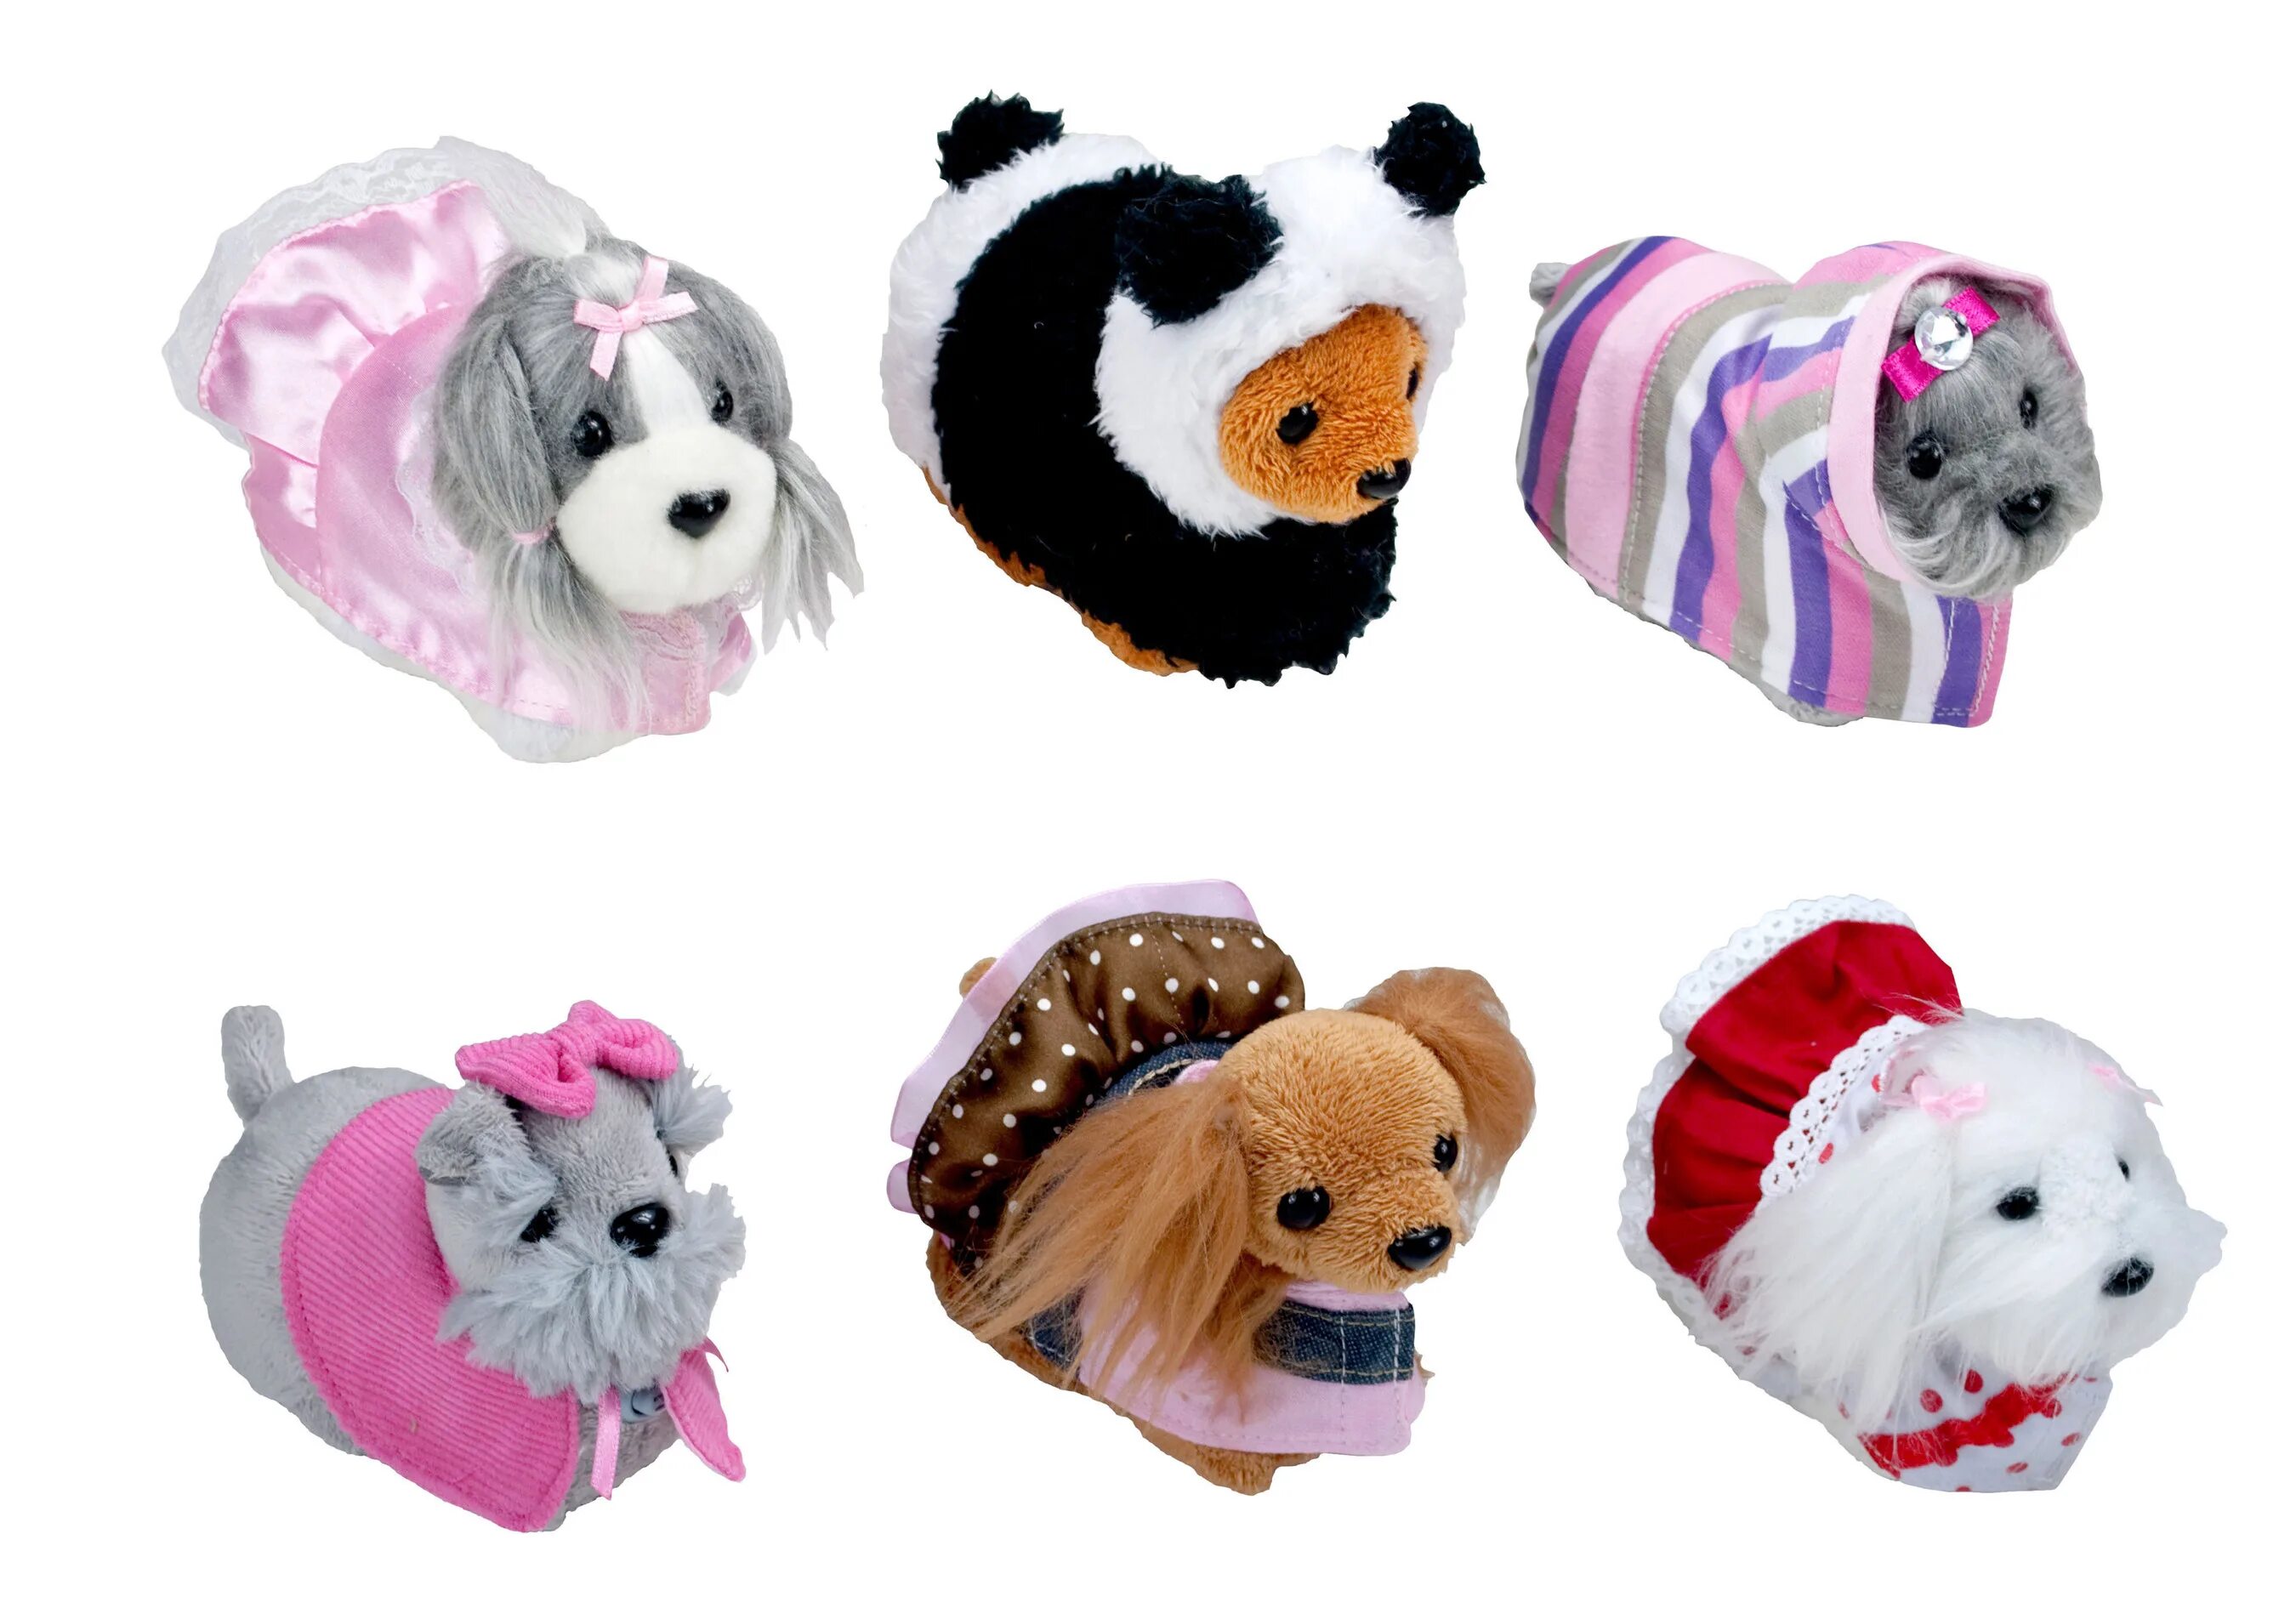 Тар петс. Zhu Zhu Puppies. Zhu Zhu Pets Cepia. Одежда для игрушечной собачки. Игрушка собака с одеждой.